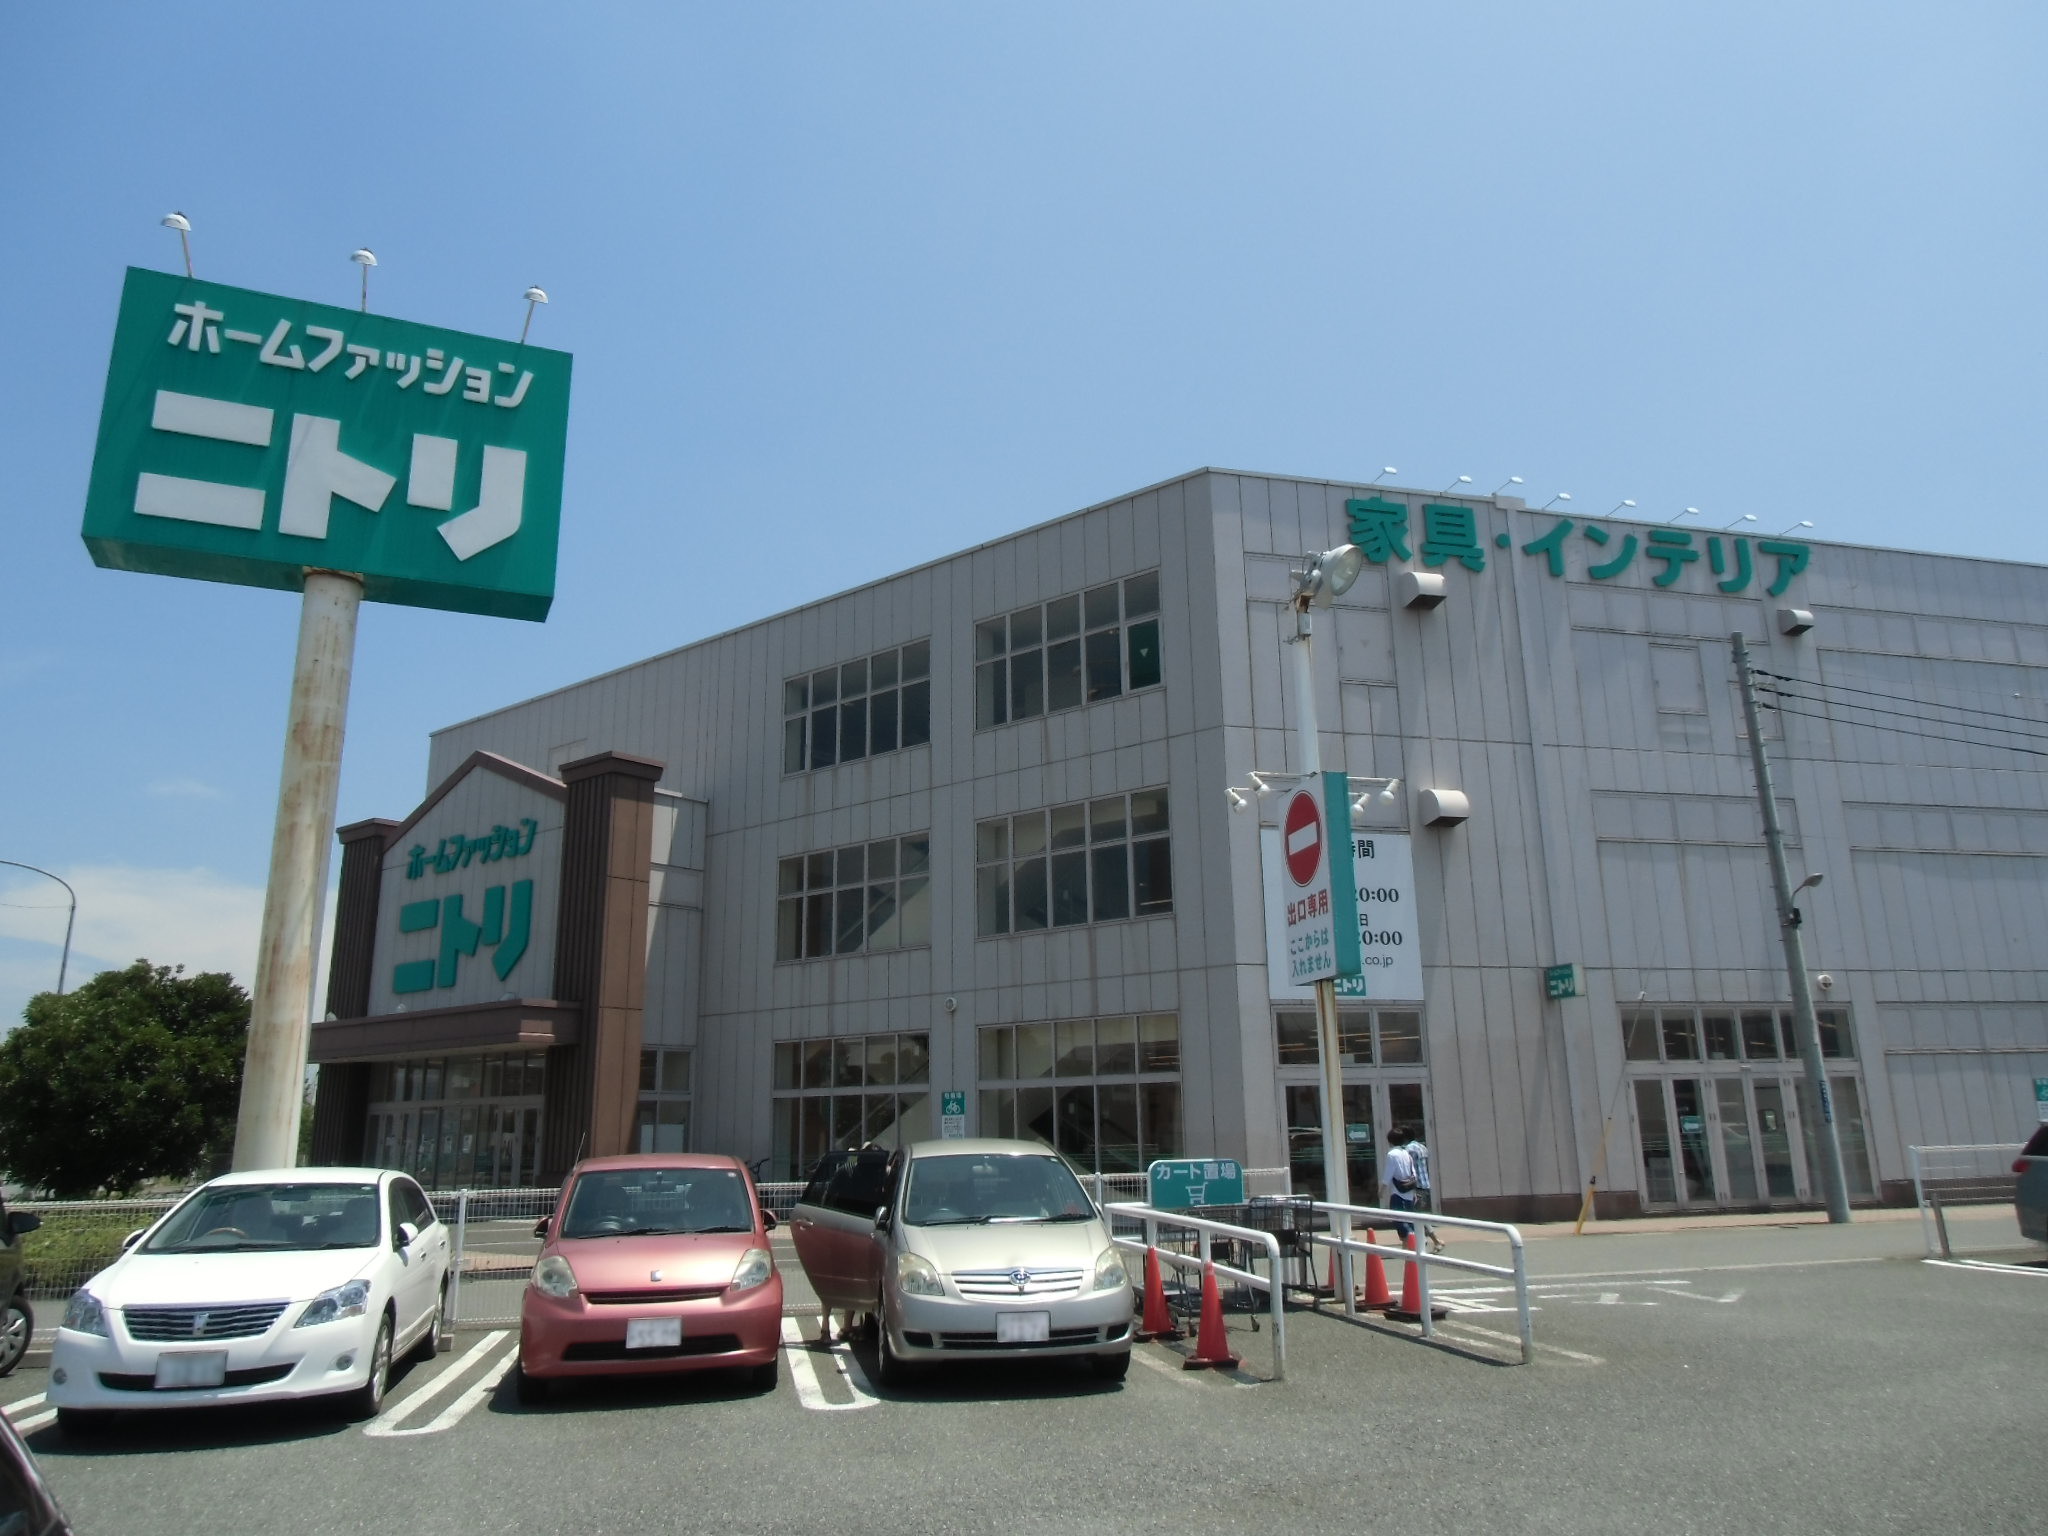 Home center. 411m to Nitori Chiba Sakuragi store (hardware store)